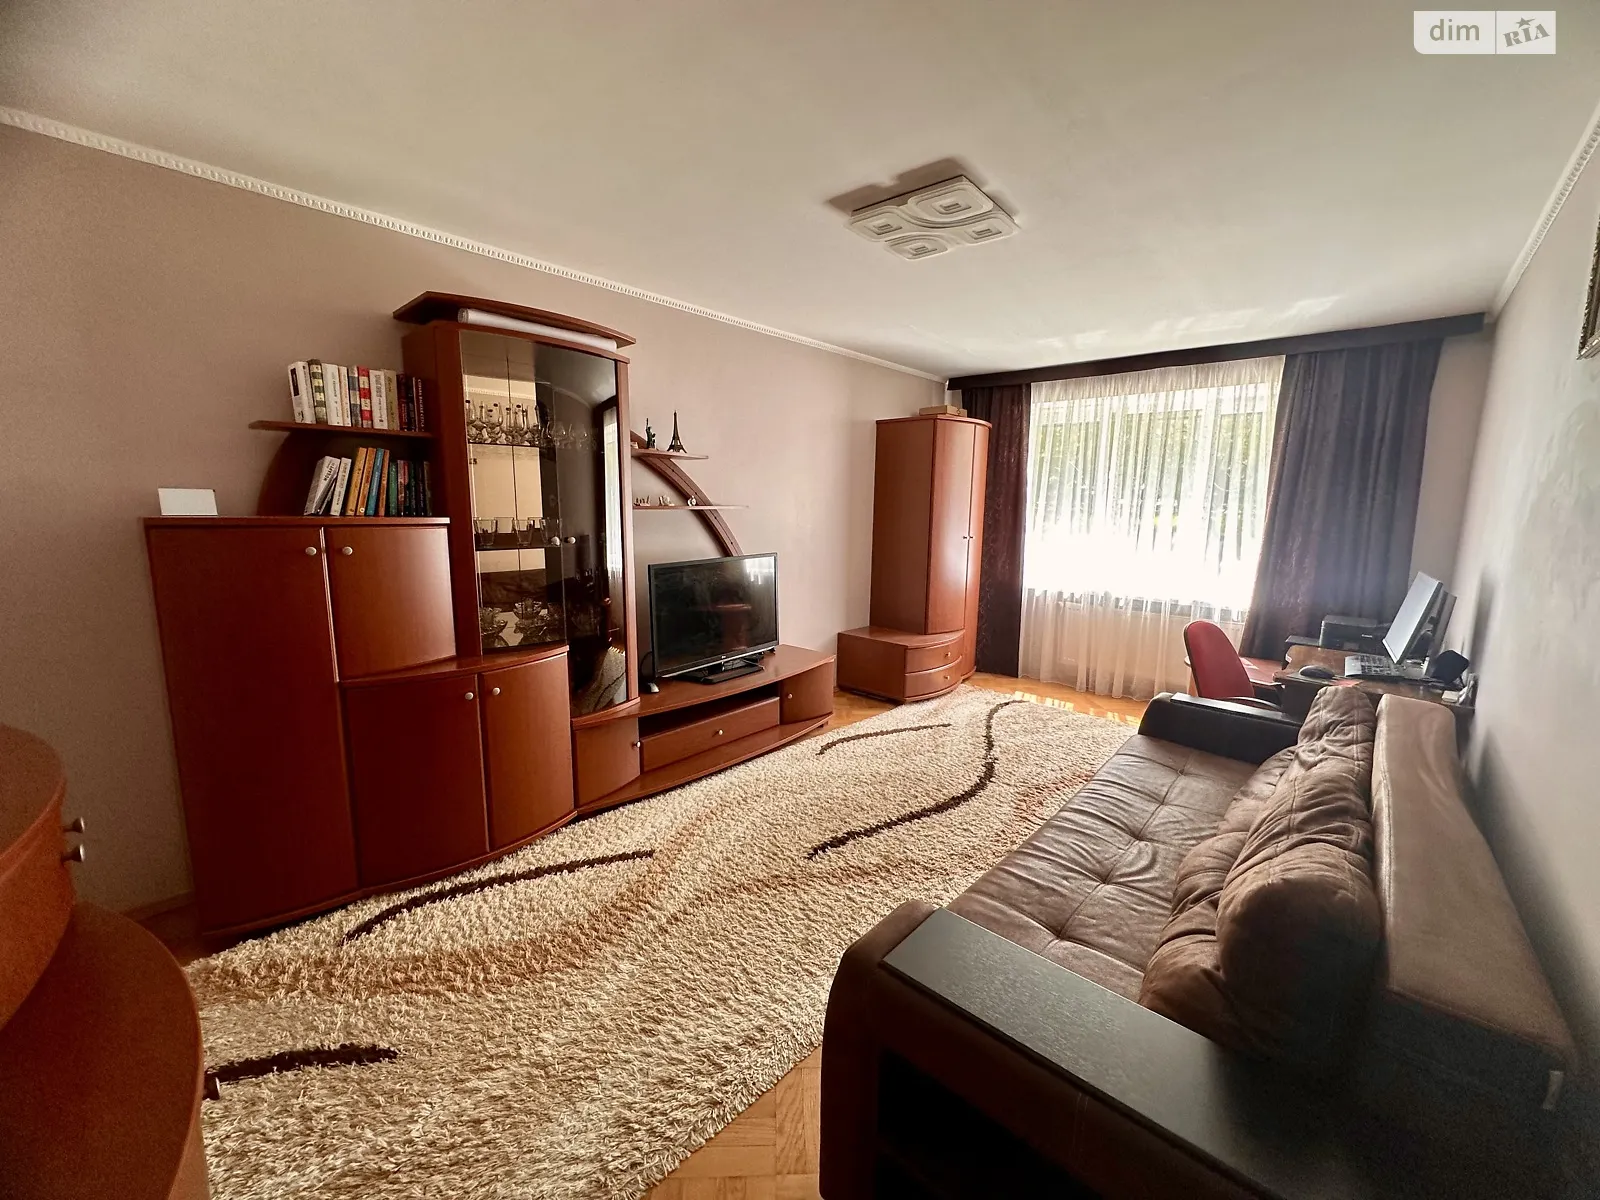 Продается 3-комнатная квартира 66.4 кв. м в Трускавце, цена: 72000 € - фото 1